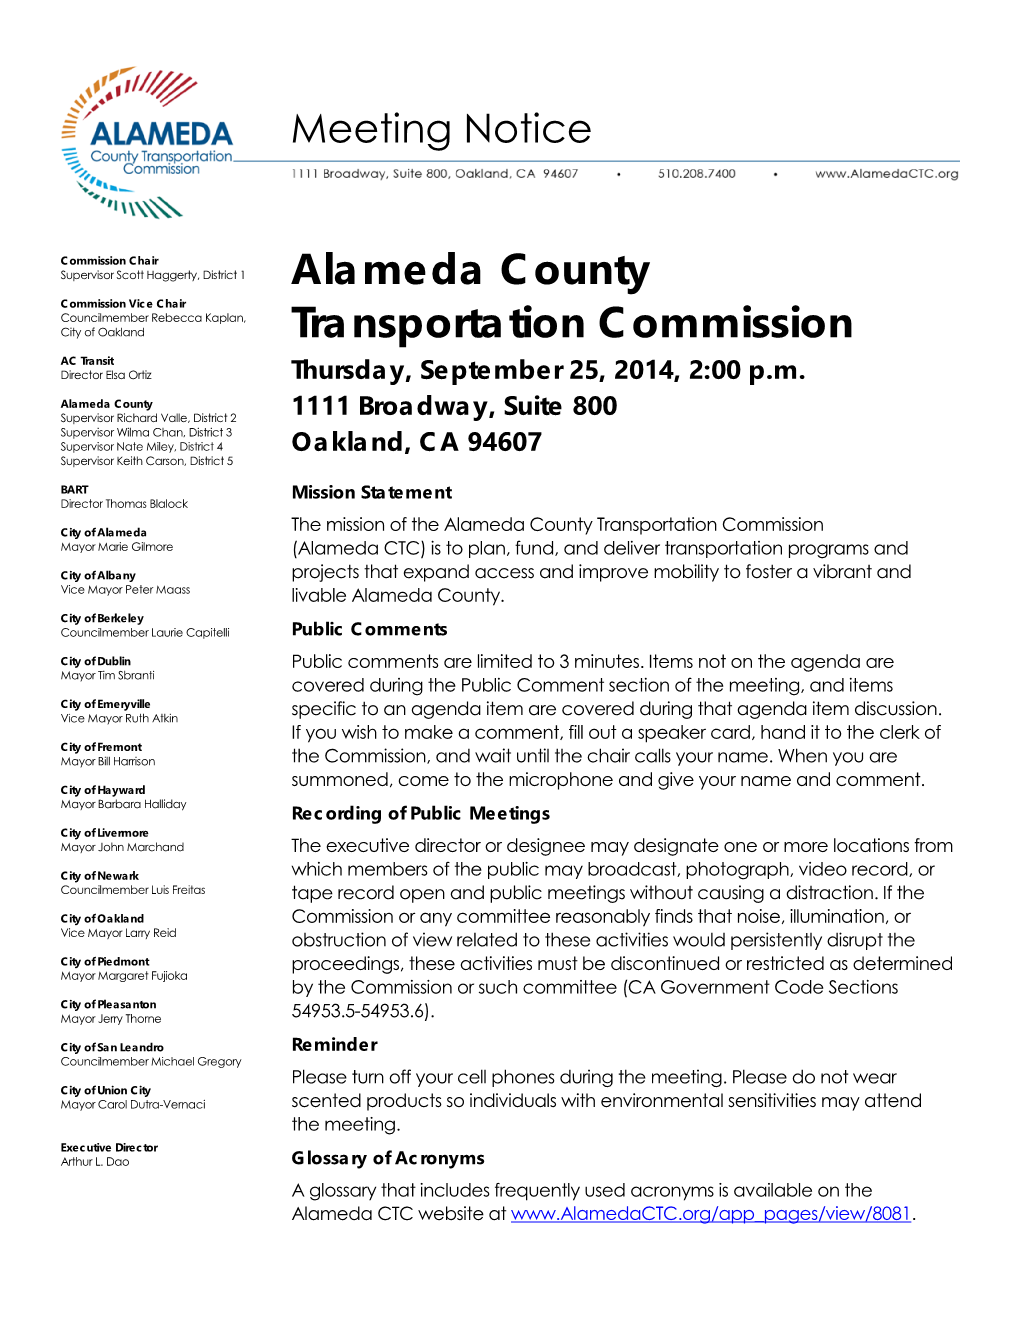 Alameda County Transportation Commission Thursday, September